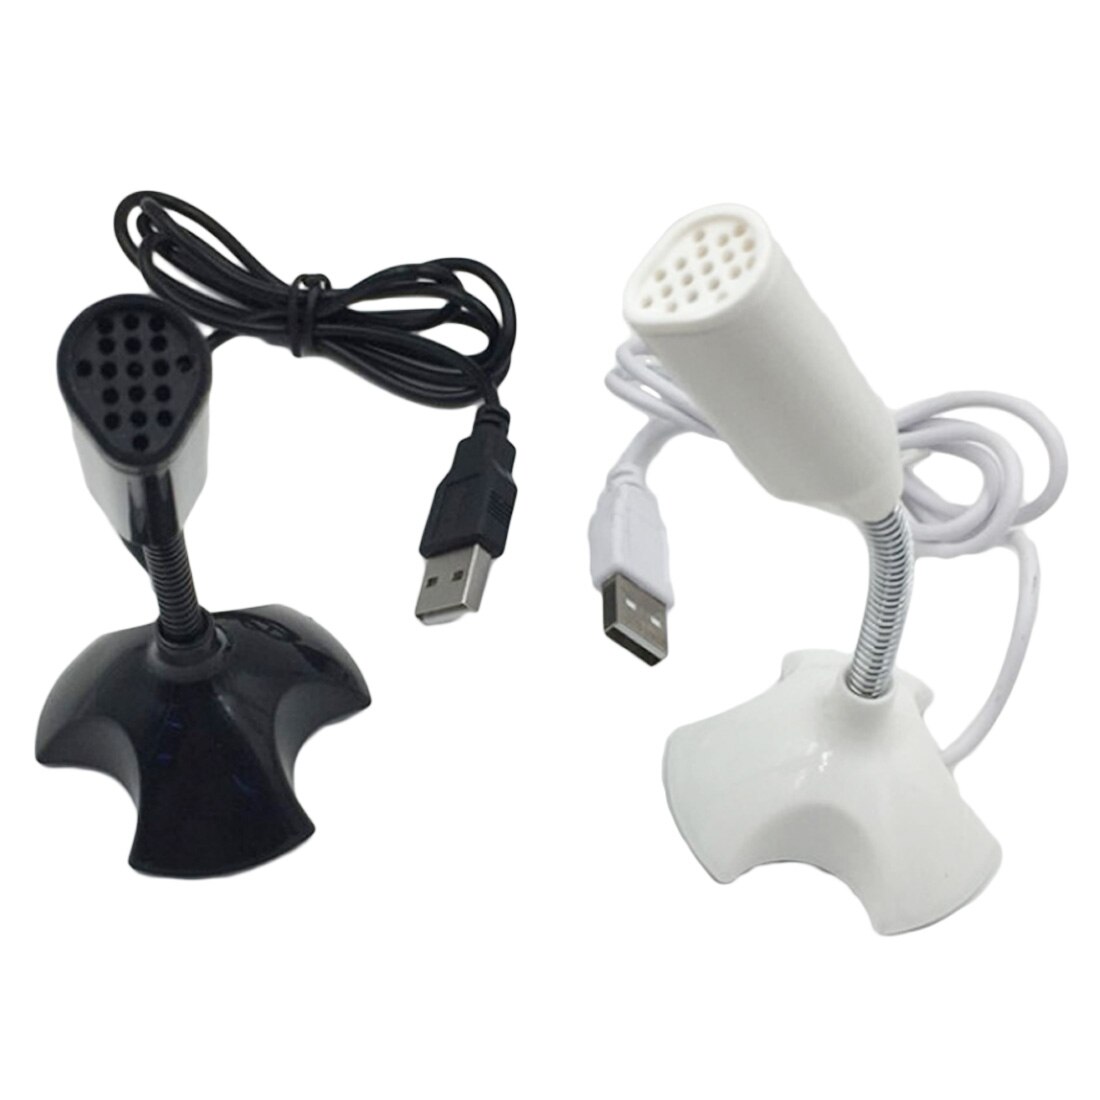 Mini Usb Microfoon Stand Mic Met Houder Voor Microfono Computer Microfoons Voor Pc Laptop Microfoon